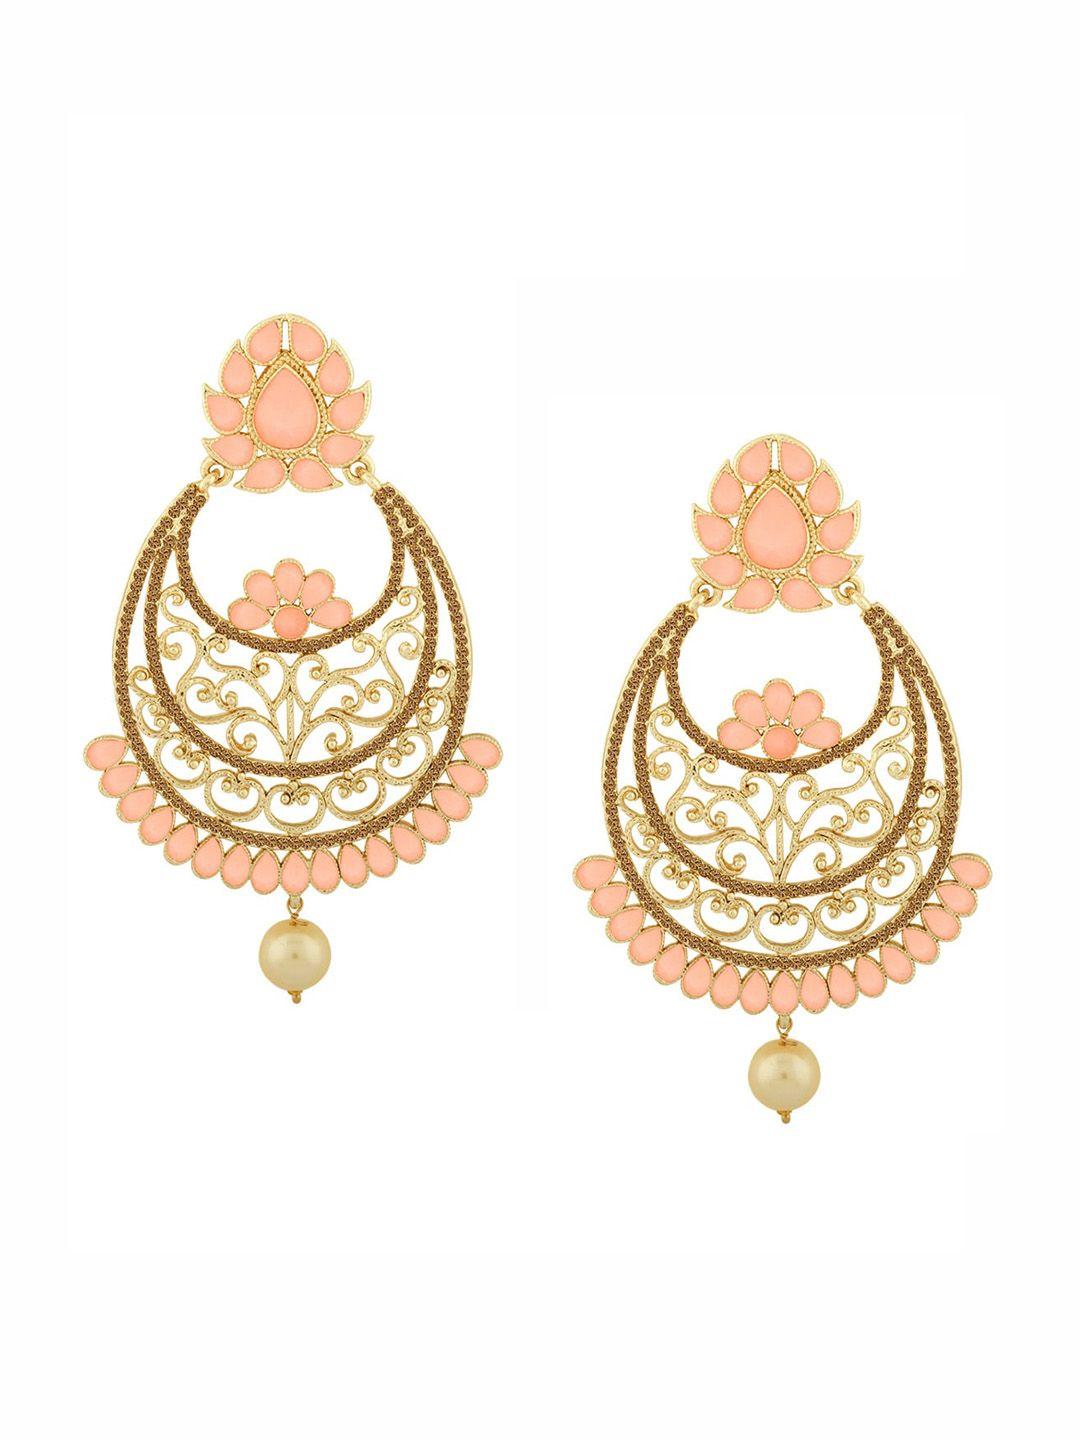 alamod gold plated classic chandbalis earrings